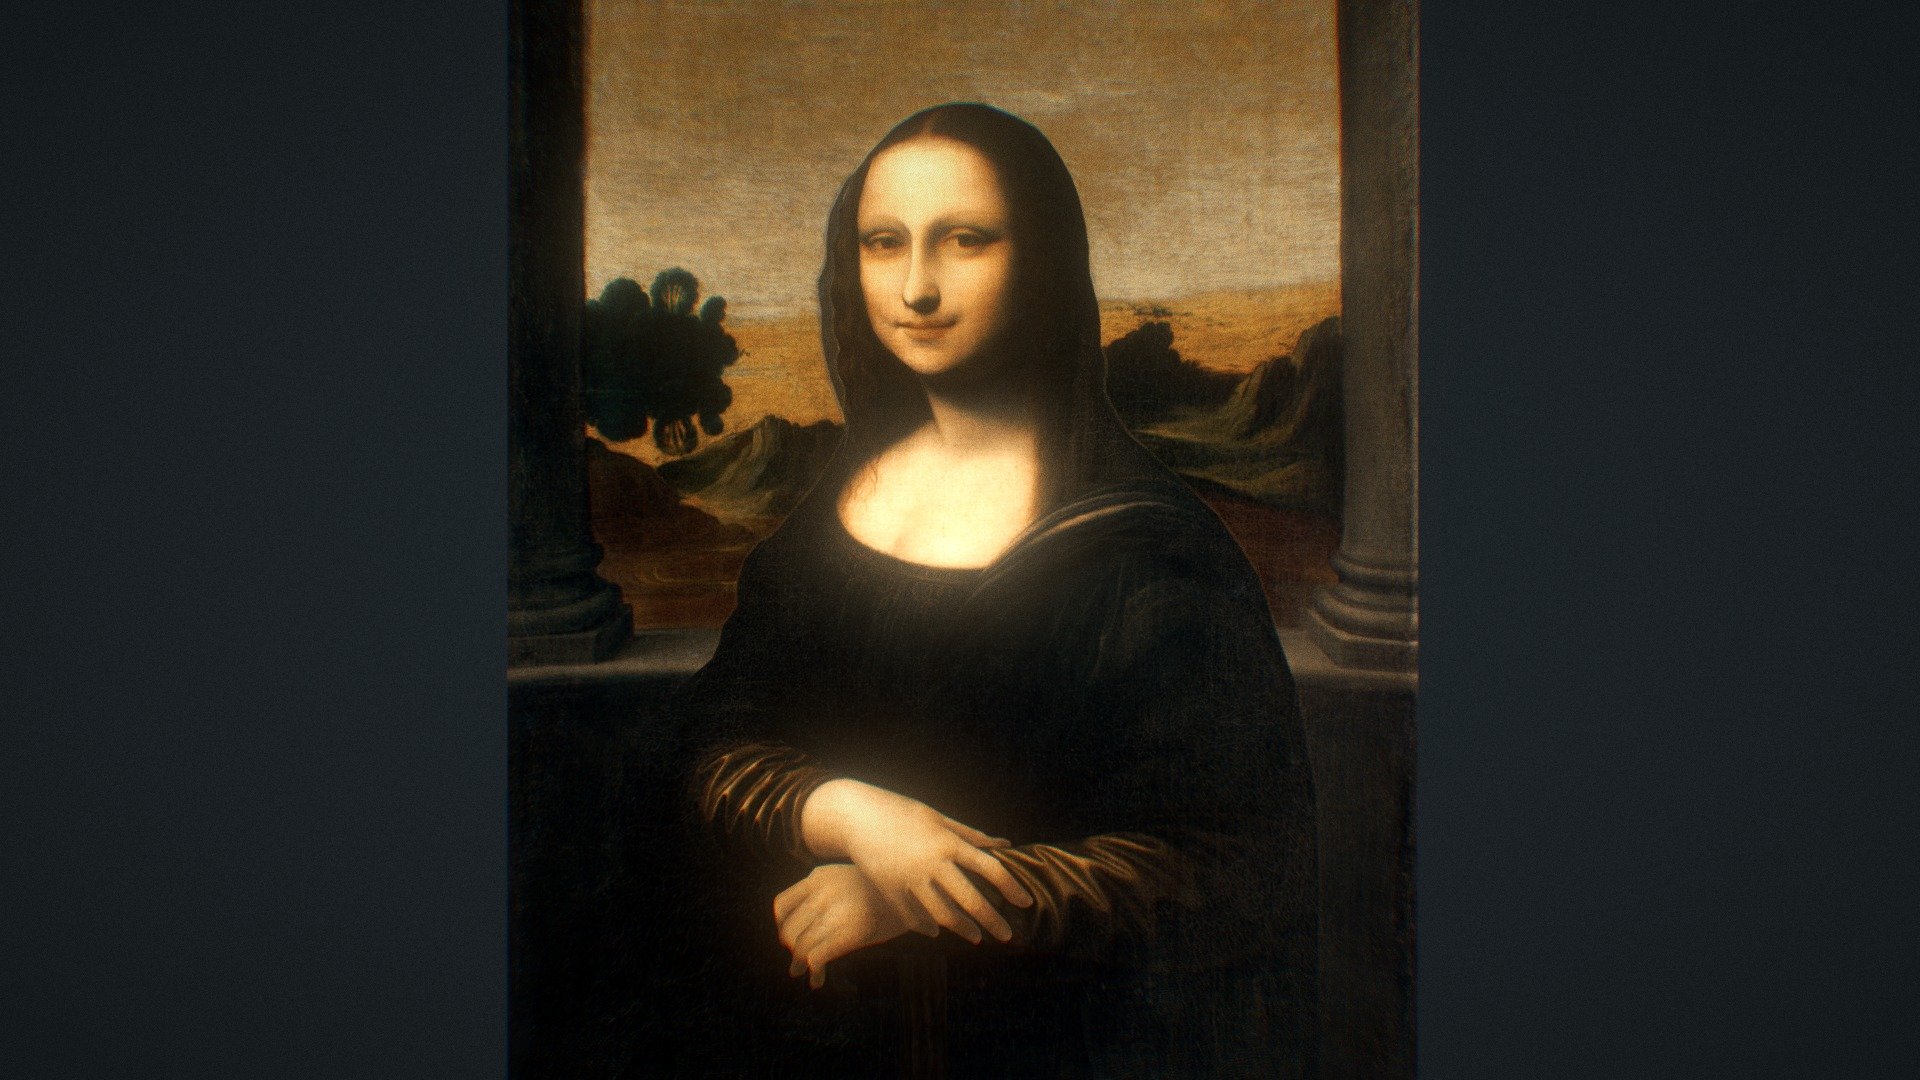 The Mona Lisa - Screen 3 on FlowVella - Presentation Software for